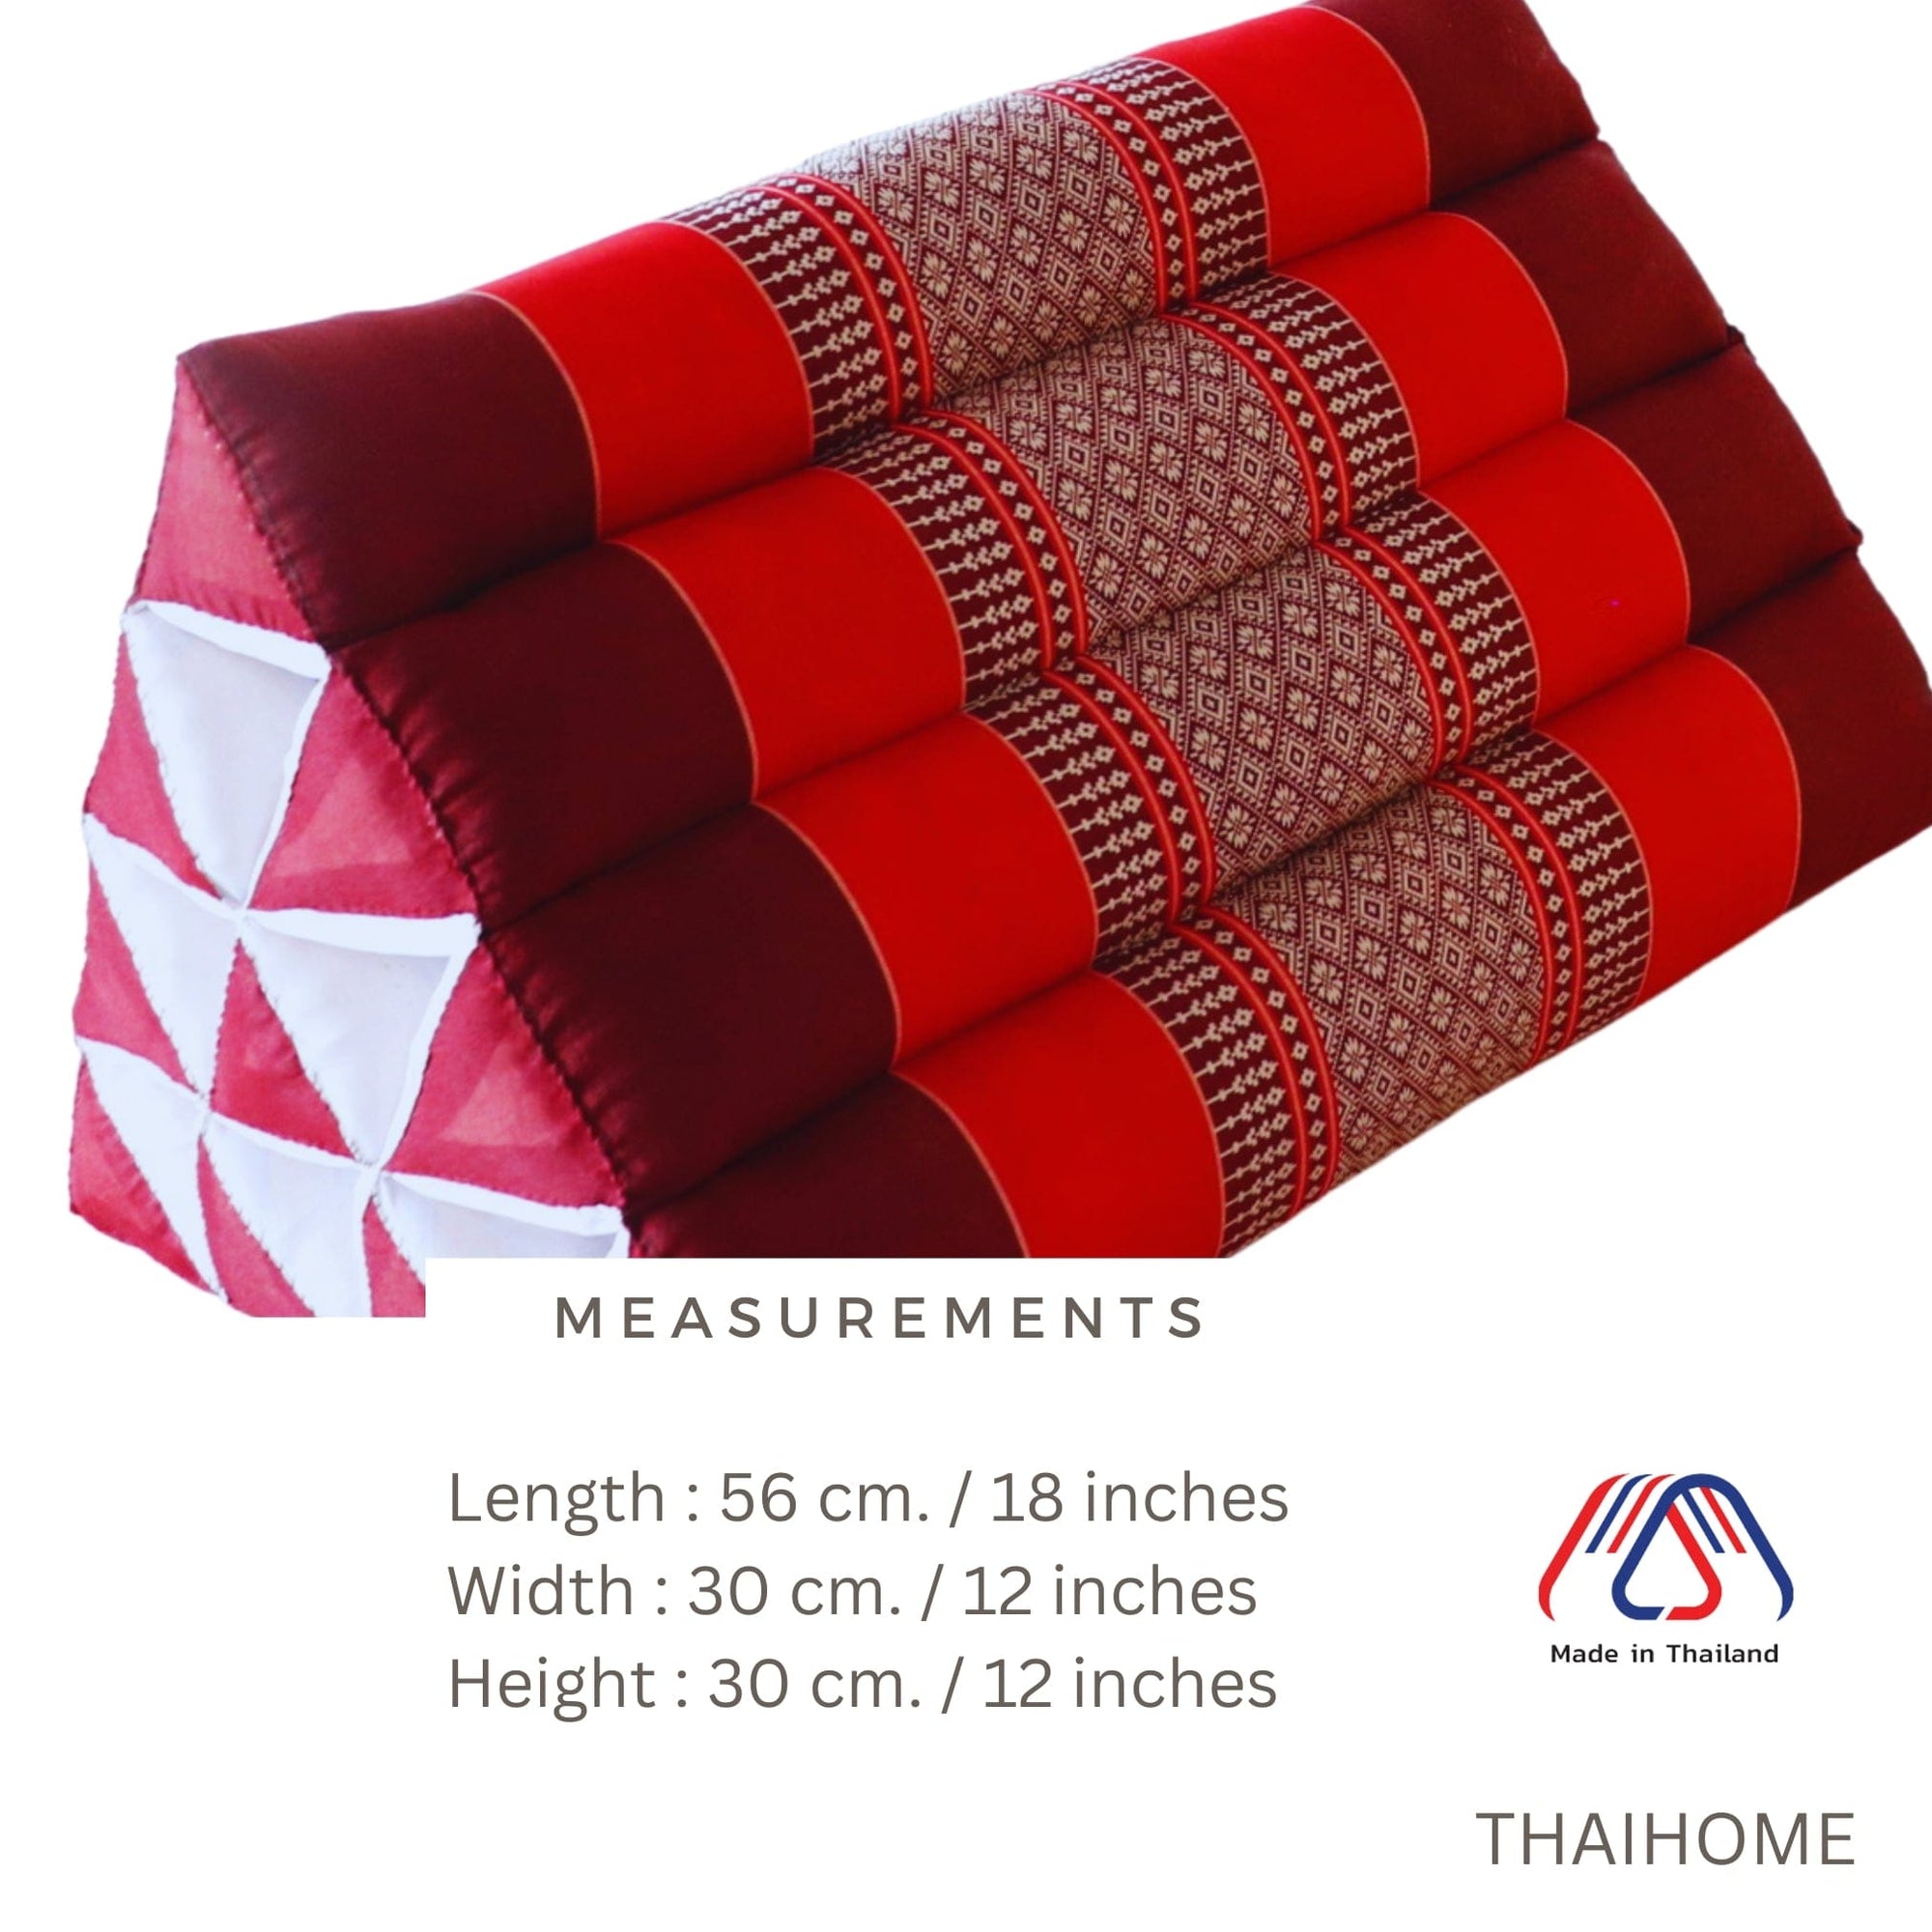 NETA - Thai Triangle Pillow - 19 x 12 inches - Comfortable and Versatile